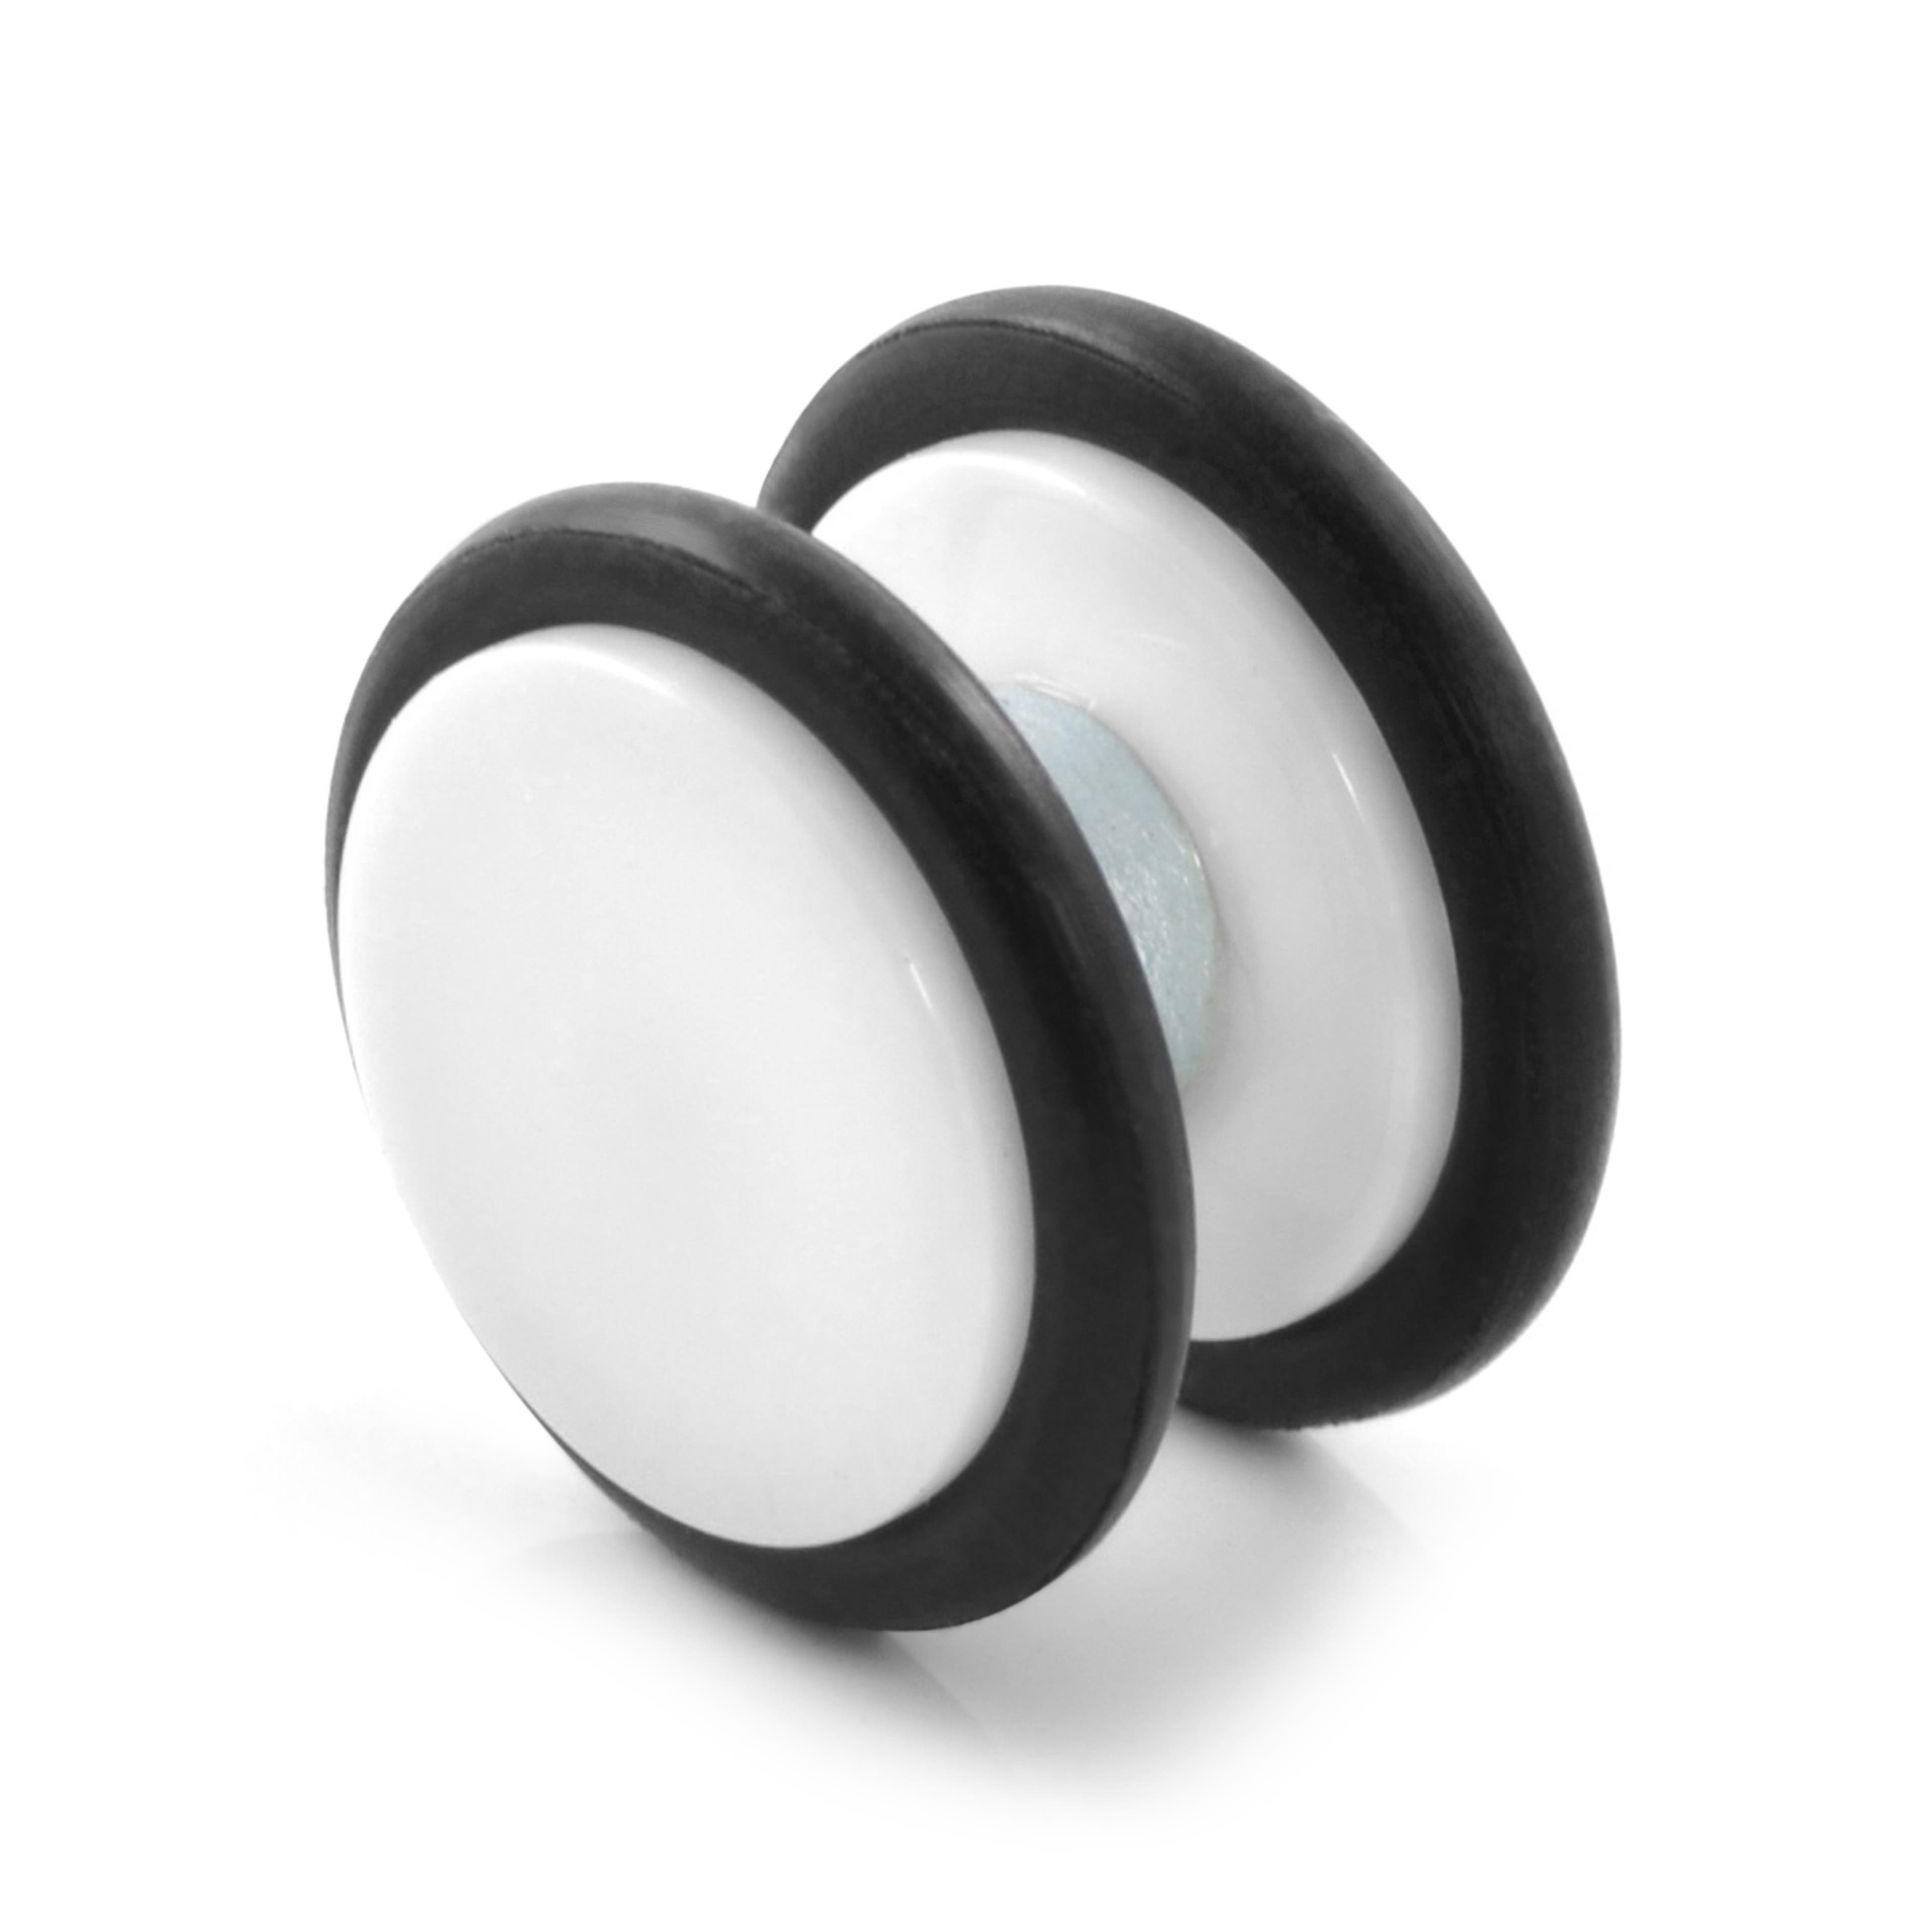 10 mm White Acrylic & Black Rubber Magnetic Earring